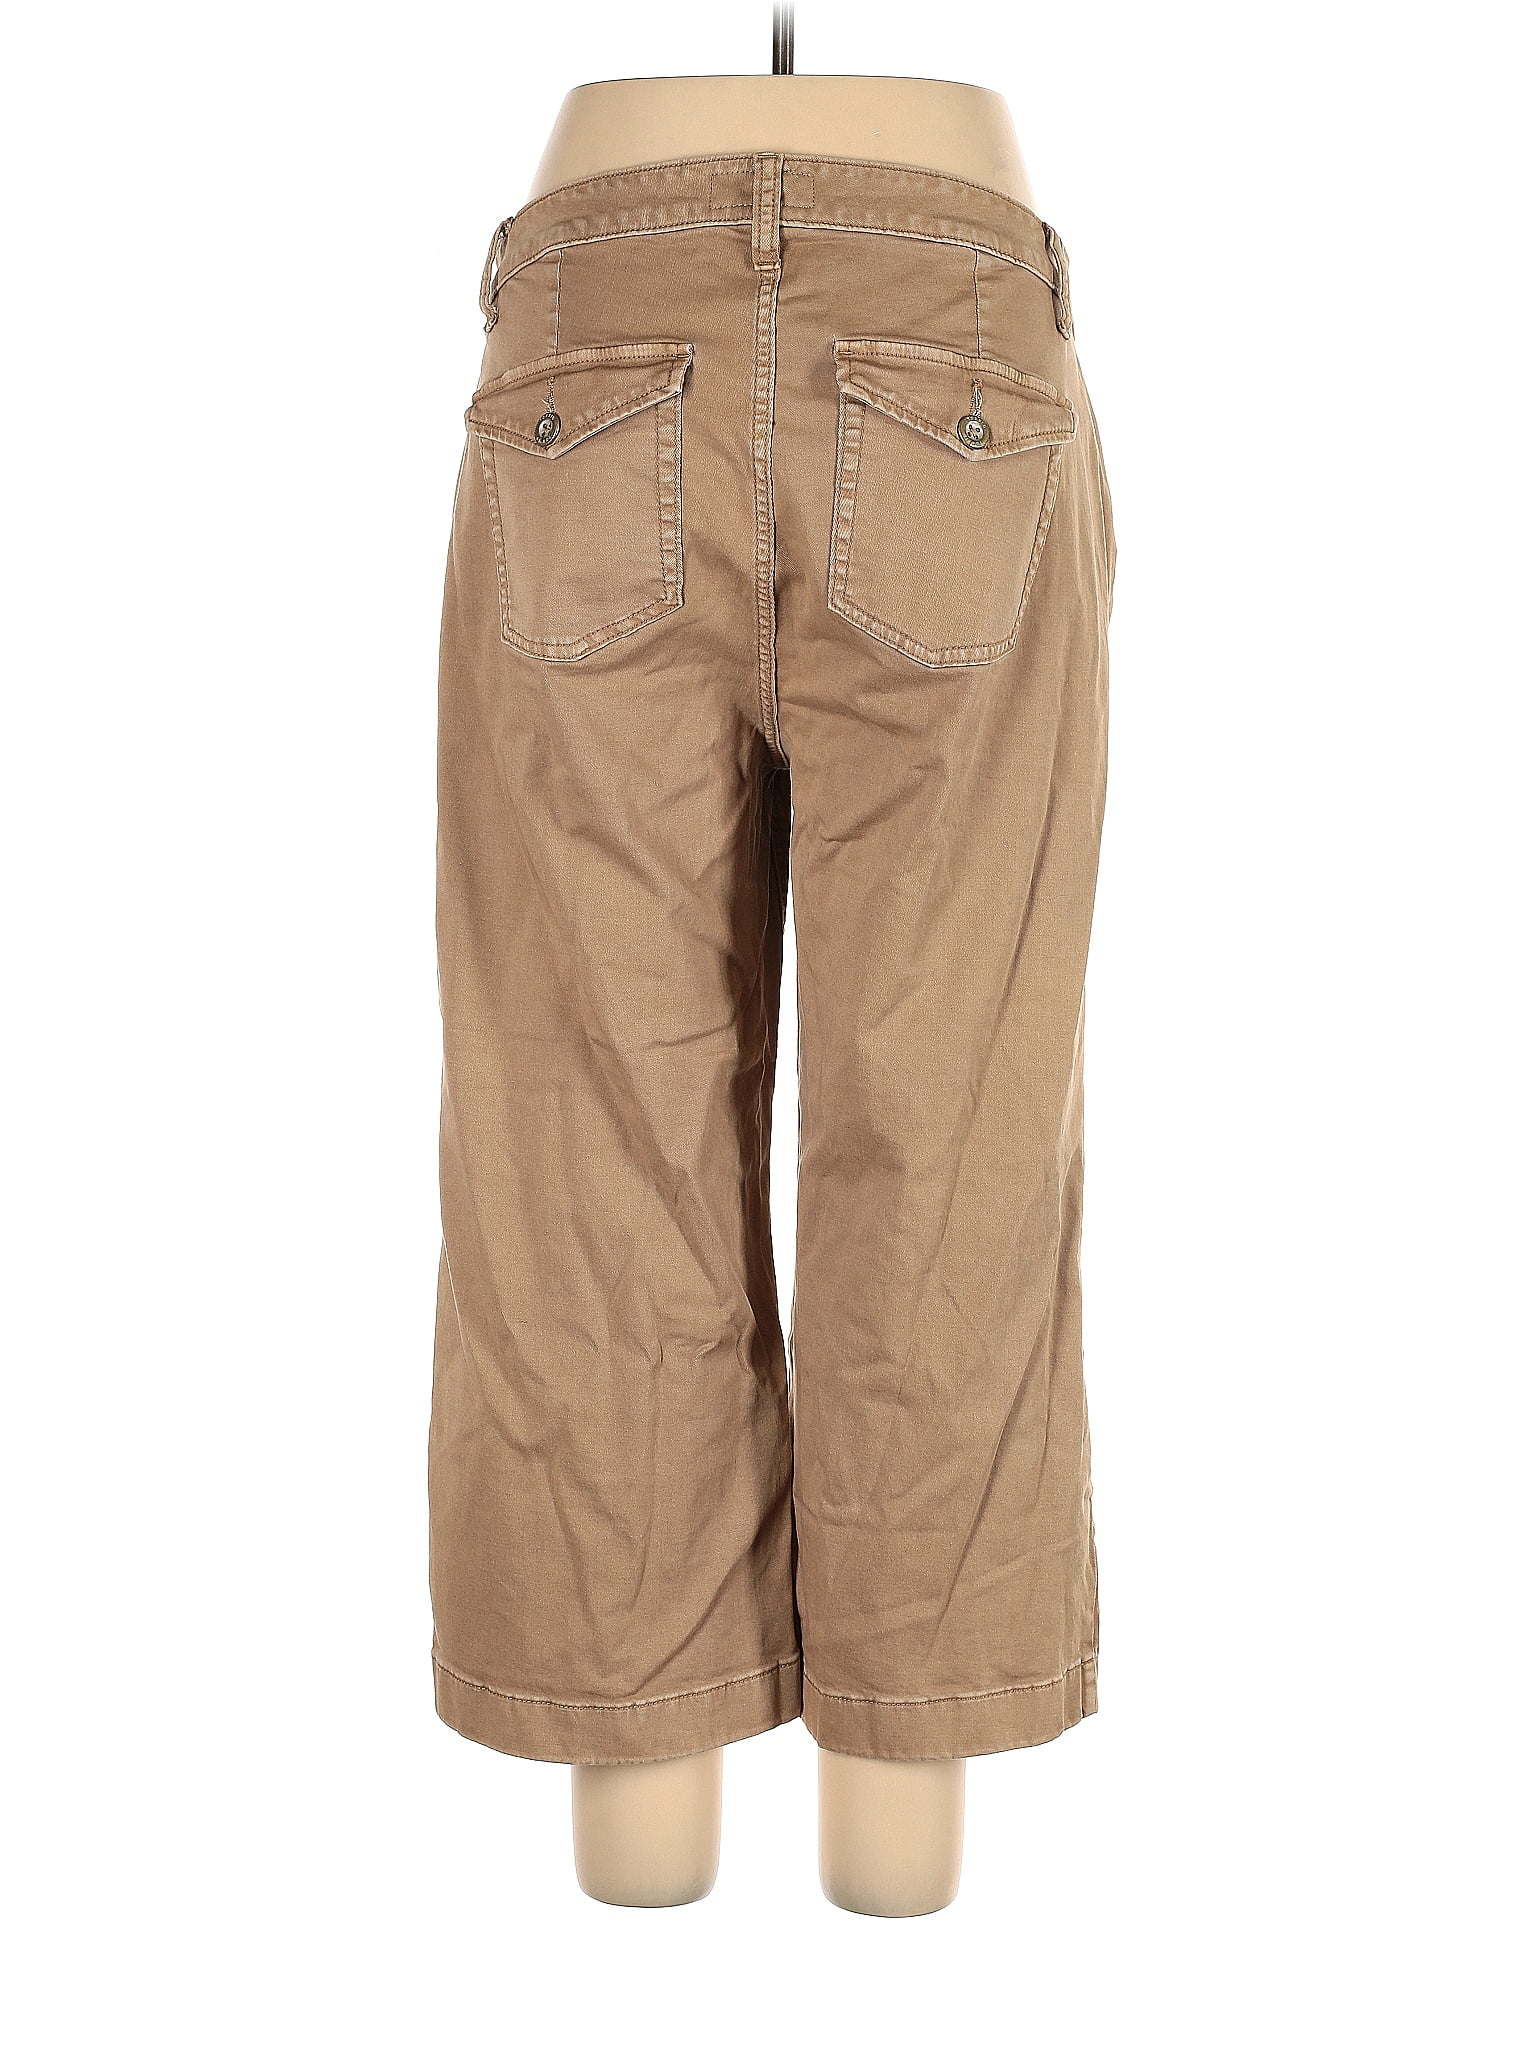 Torrid Solid Brown Tan Jeans Size 14 (Plus) - 58% off